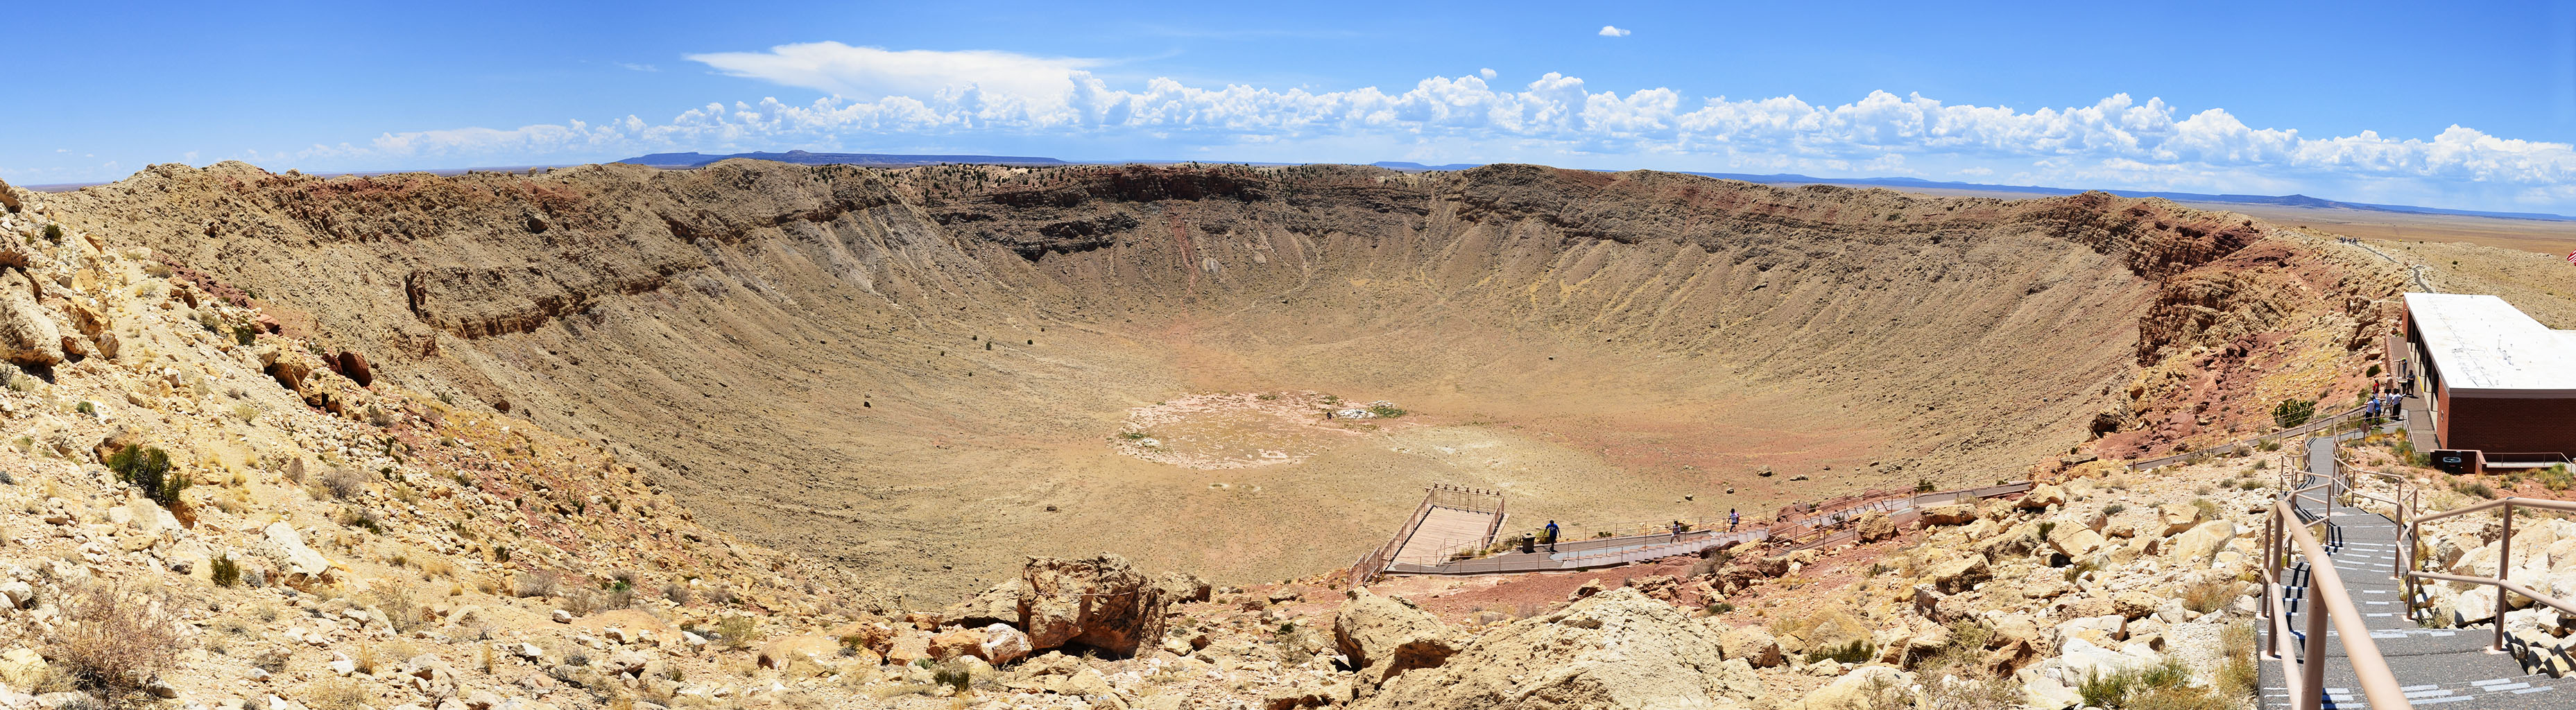 Meteor_Crater_Panorama_near_Winslow%2C_Arizona%2C_2012_07_11.jpg